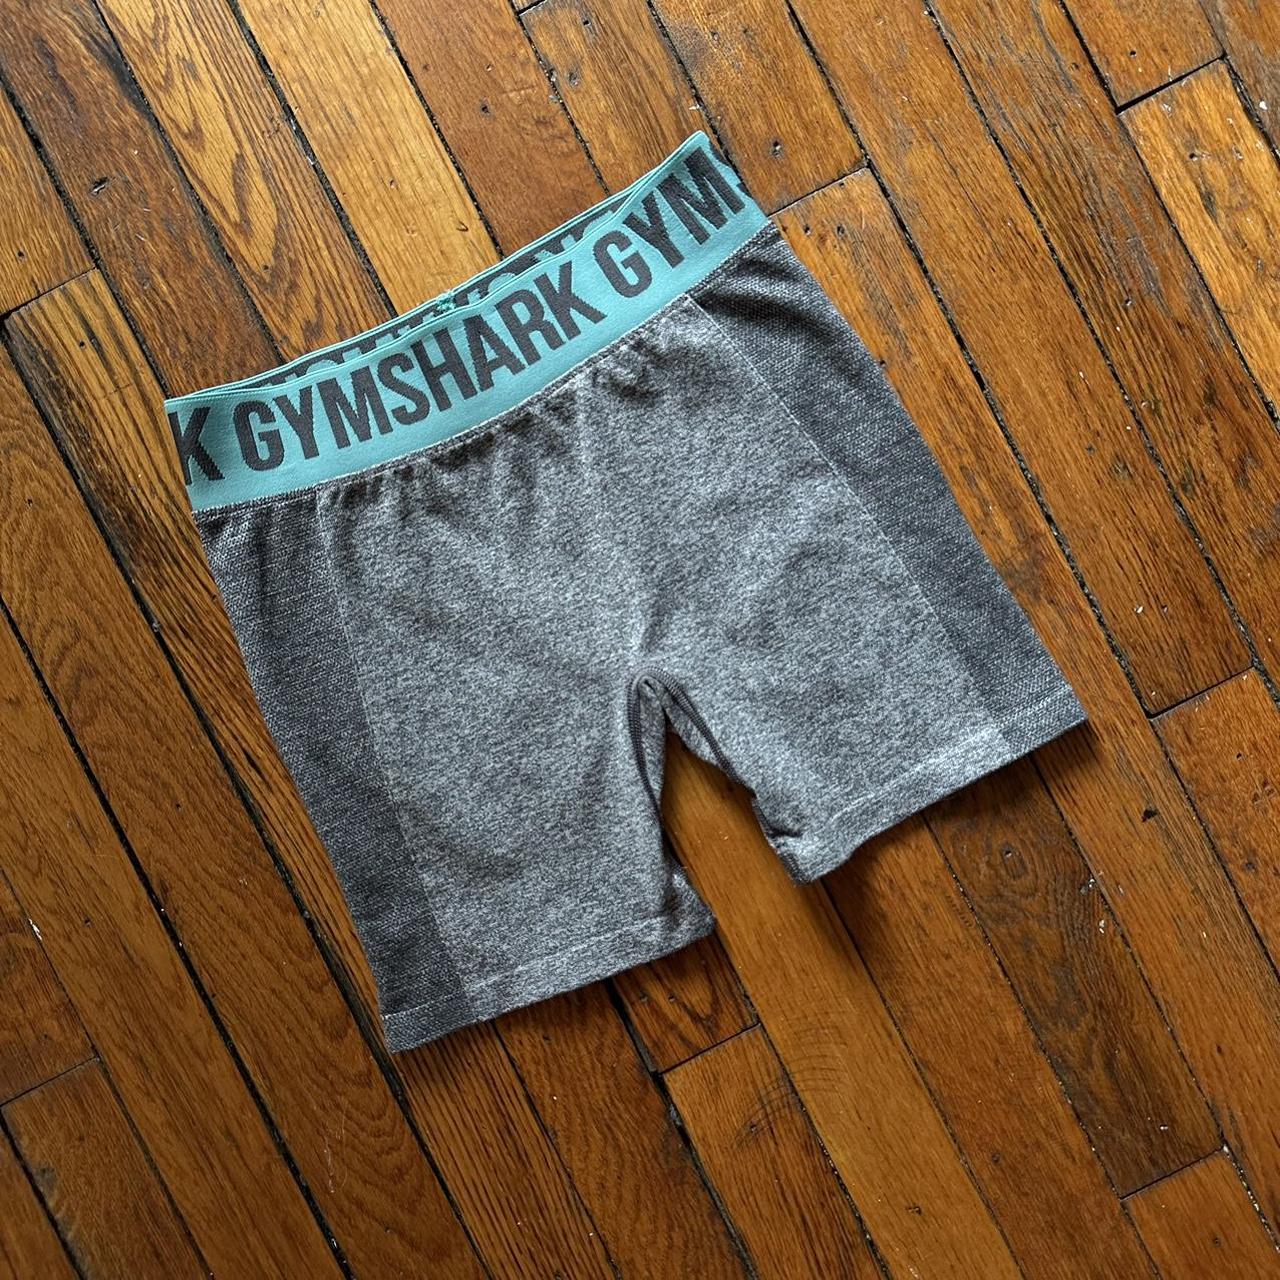 Gymshark flex shorts. Grey with turquoise waist - Depop